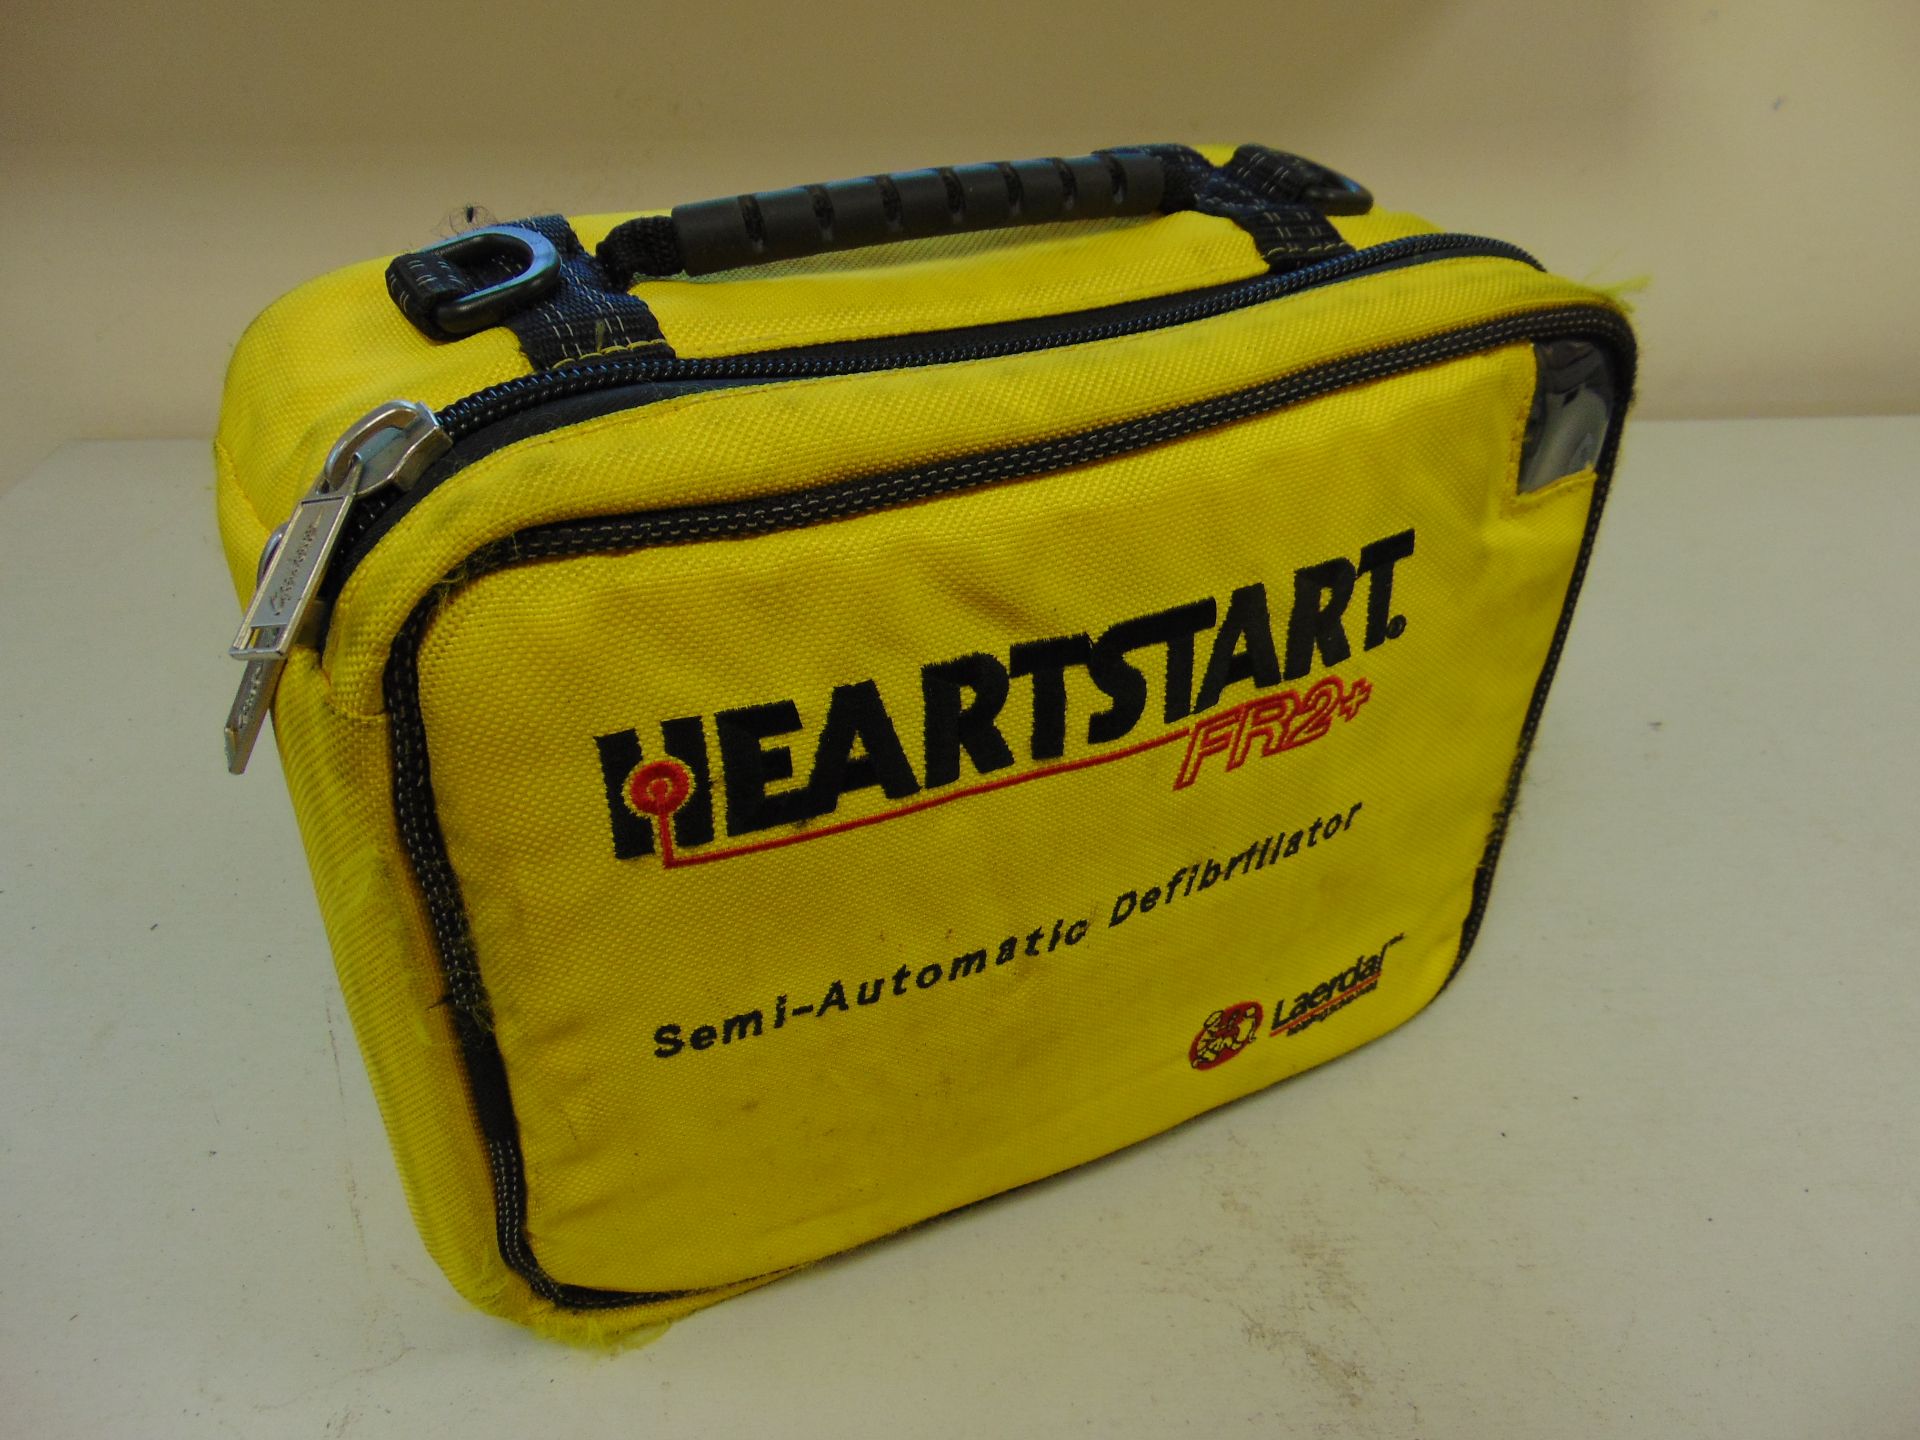 Heartstart FR2+ Semi-Automatic Defibrillator Unit in Carry Case - Image 4 of 5